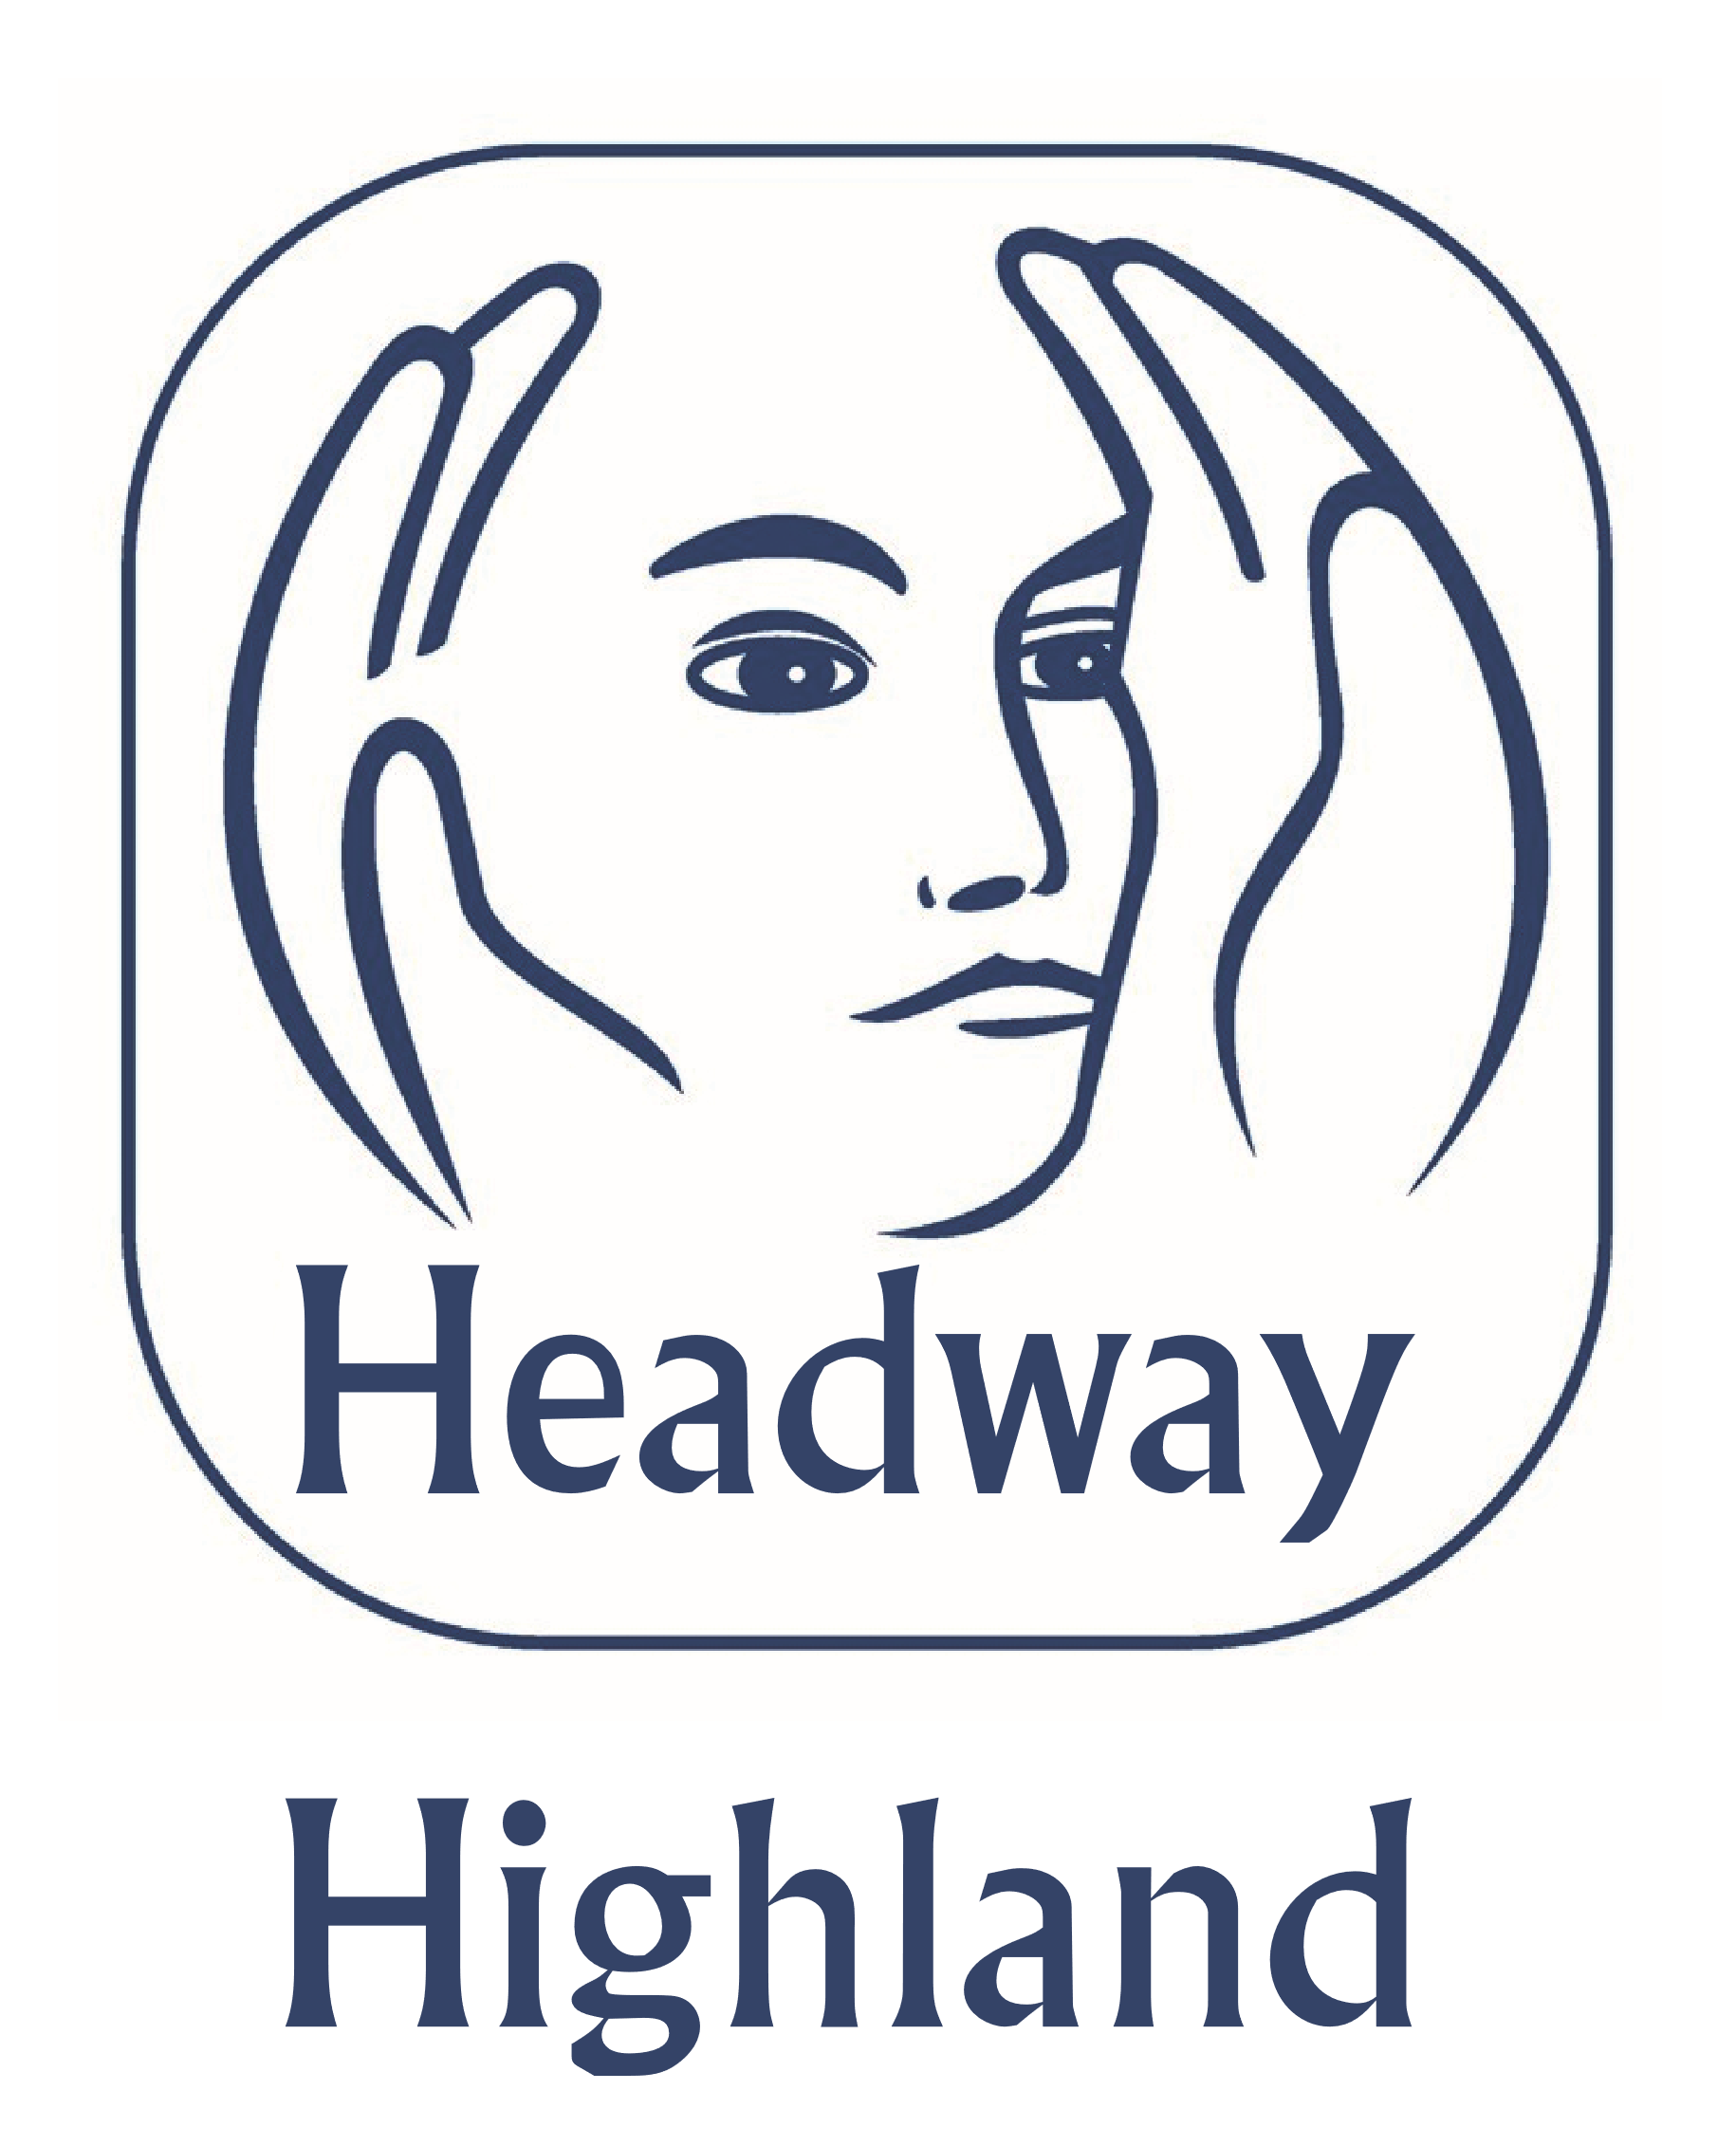 Headway Highland Logo